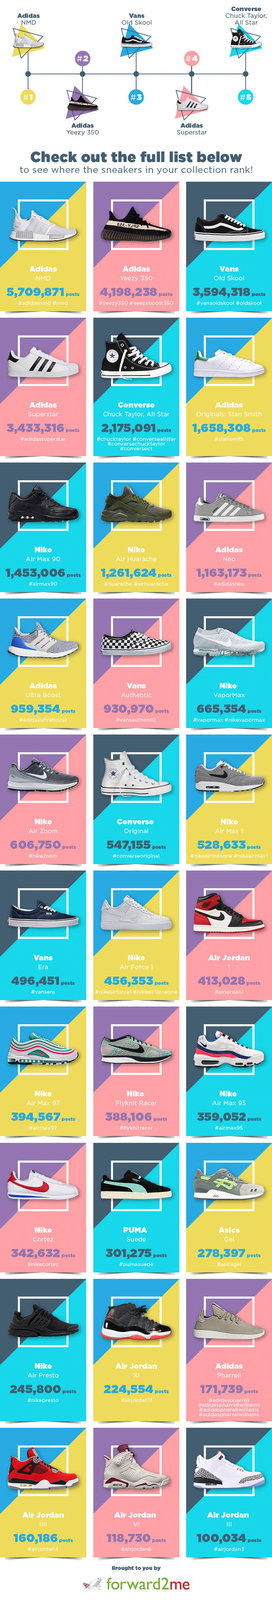 NMD,YEEZY,AJ1  AJ1 的排名你猜不到！Instagram 最受欢迎球鞋排名出炉